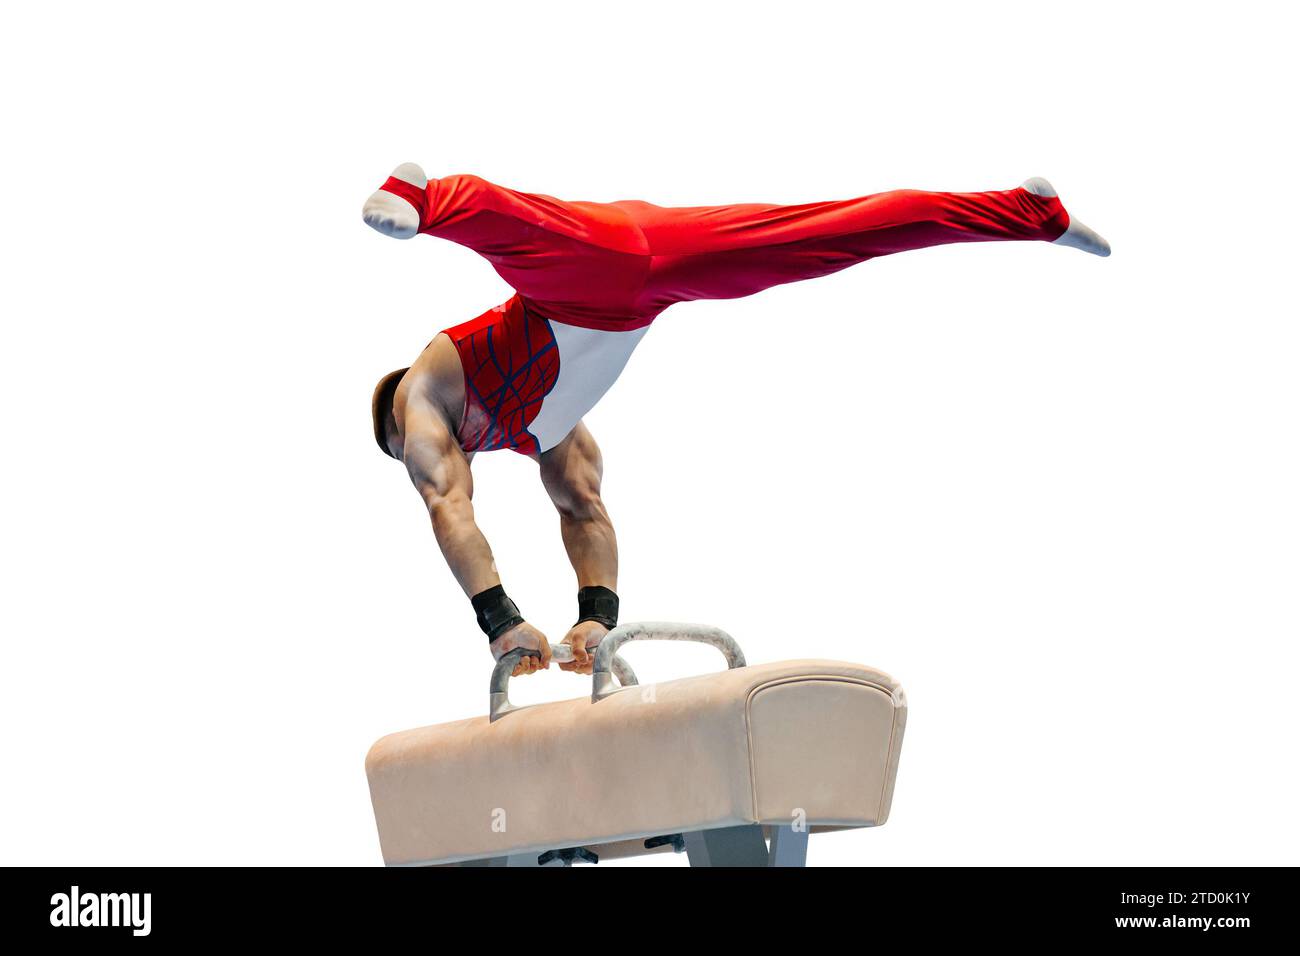 gimnasta masculino que realiza en la competencia de caballo de pomo gimnasia artística aislada sobre fondo blanco Foto de stock